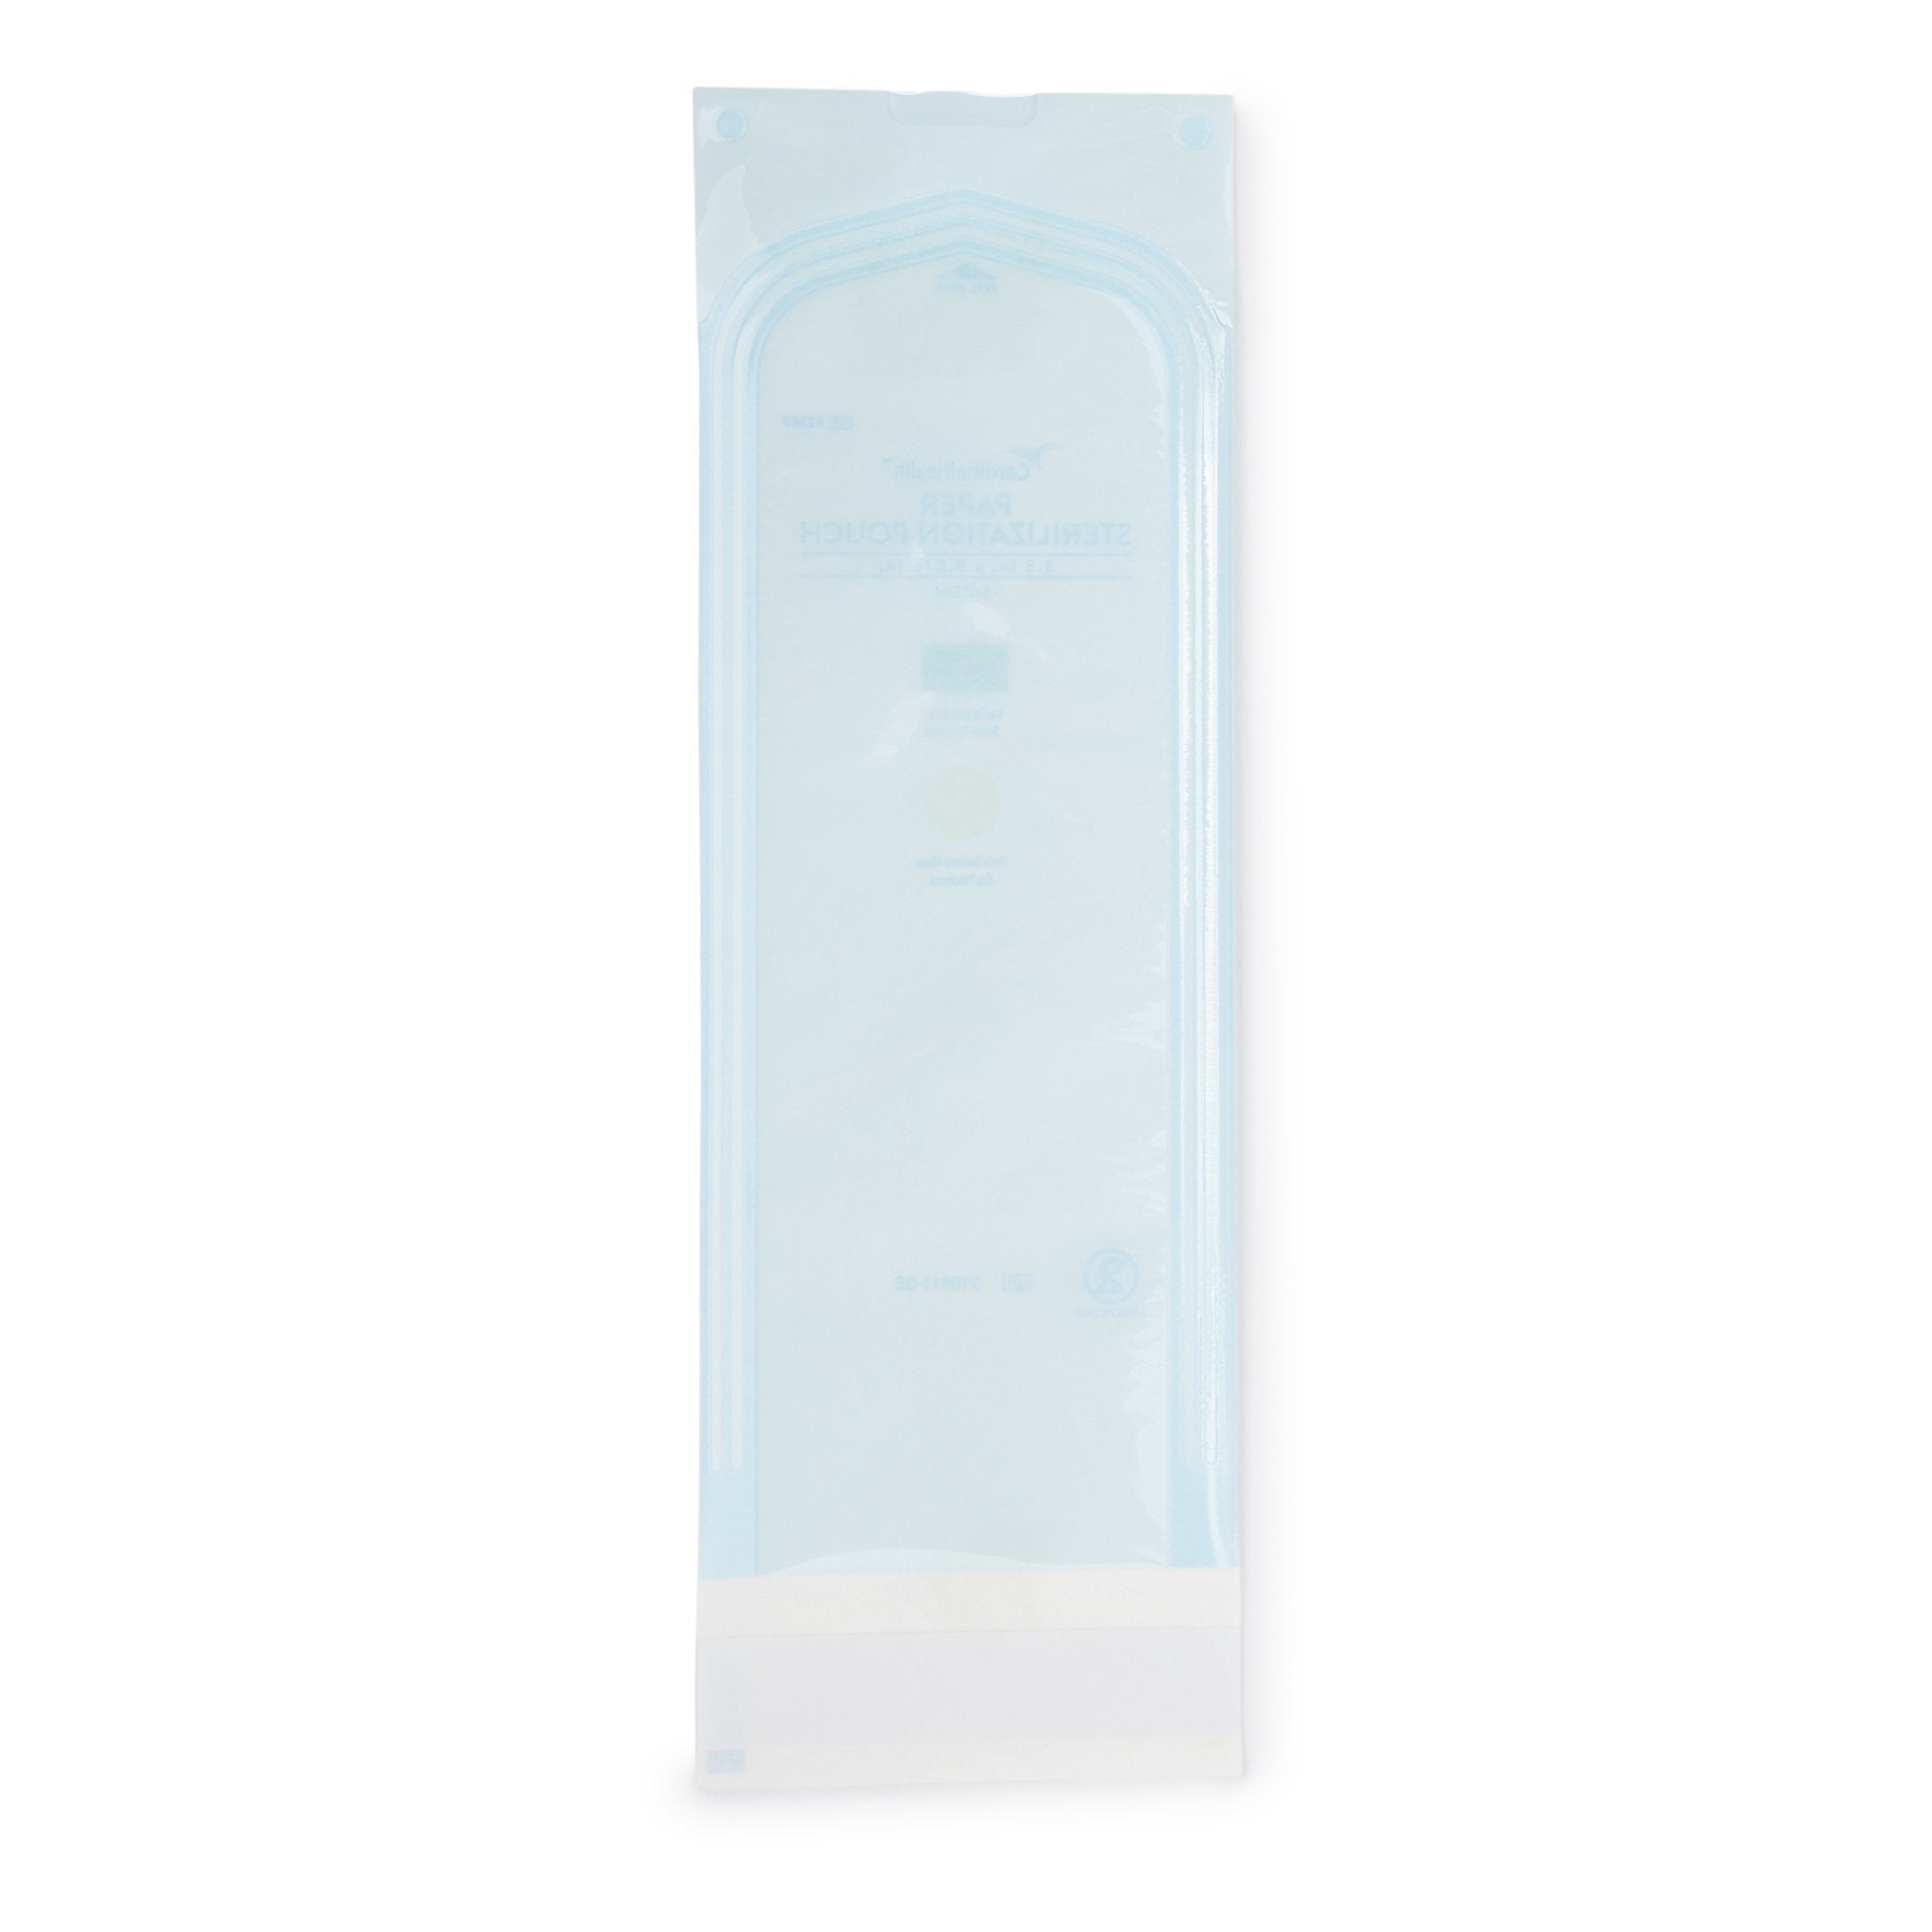 Sterilization Pouch Ethylene Oxide (EO) Gas / Steam 3-1/2 X 9 Inch Transparent / White Self Seal Paper / Film